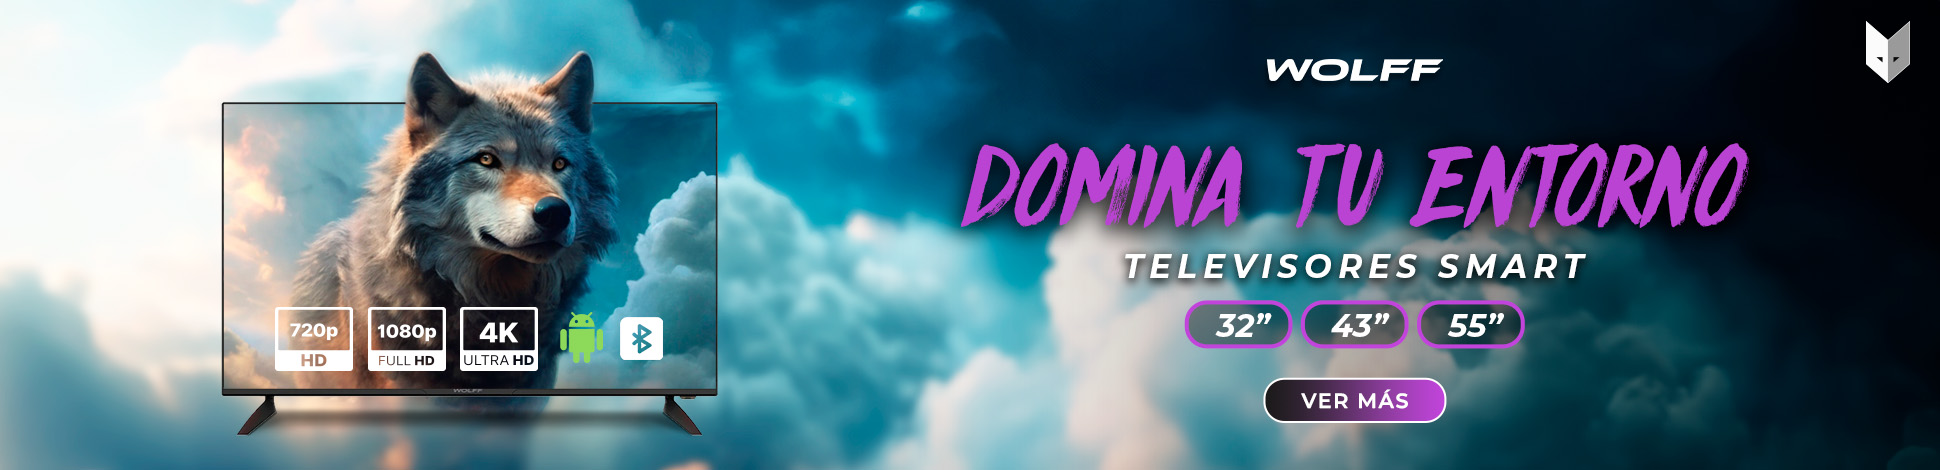 Banner DesktopDomina-Juntoz (1).jpg